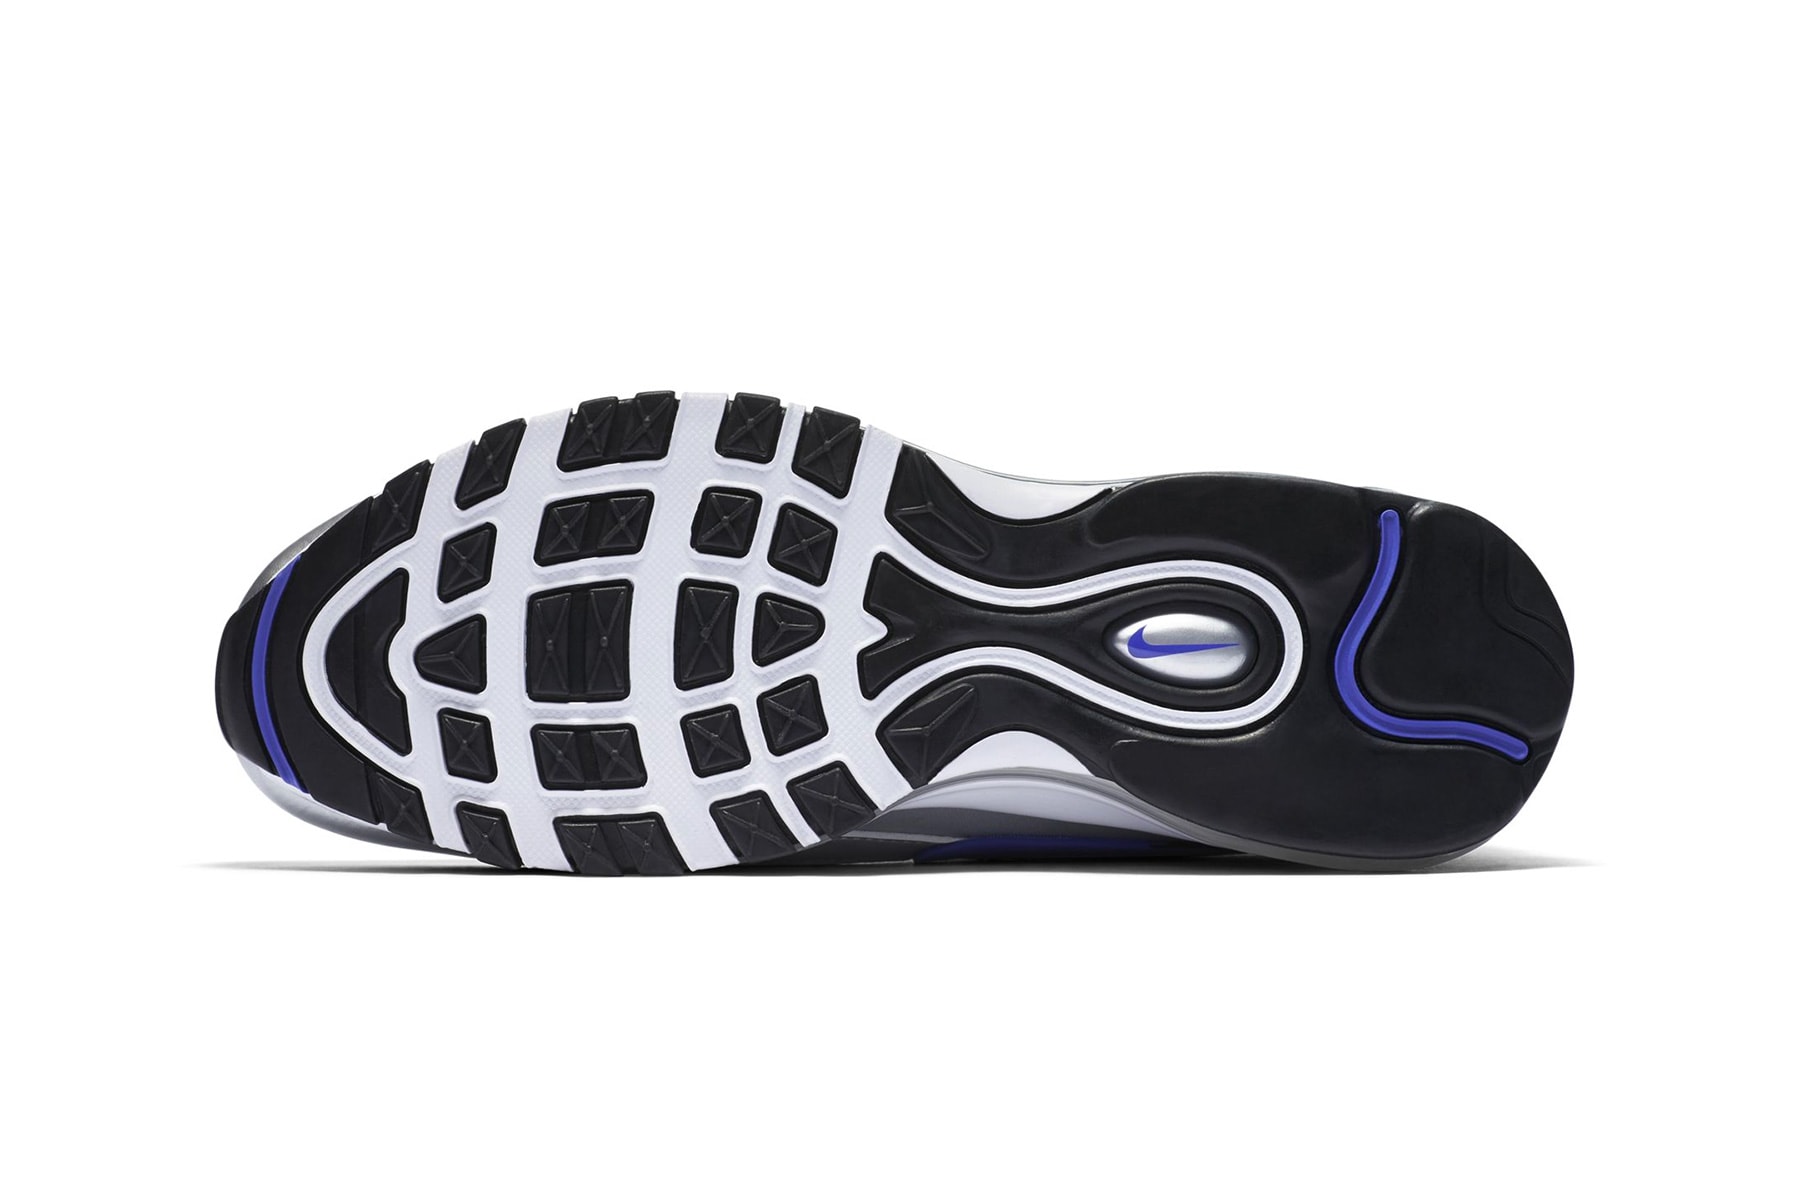 Nike Air Max 97 BW "Metallic Silver" sneaker colorway hybrid model release date info price purchase skepta